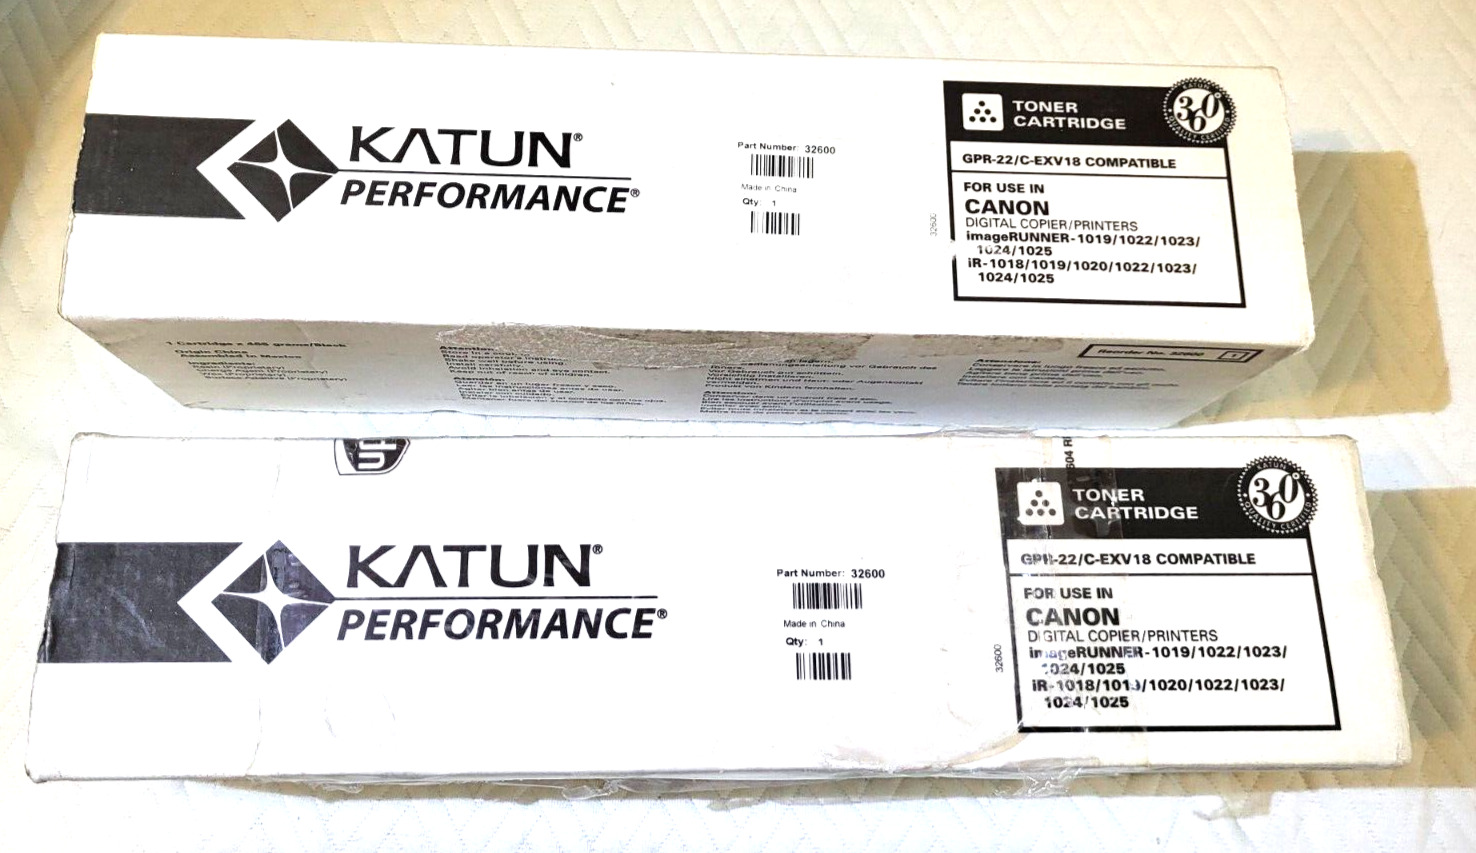 2 KATUN 32600 Toner Black for Canon GPR-22 C-EXV18 Digital Copier/Printers